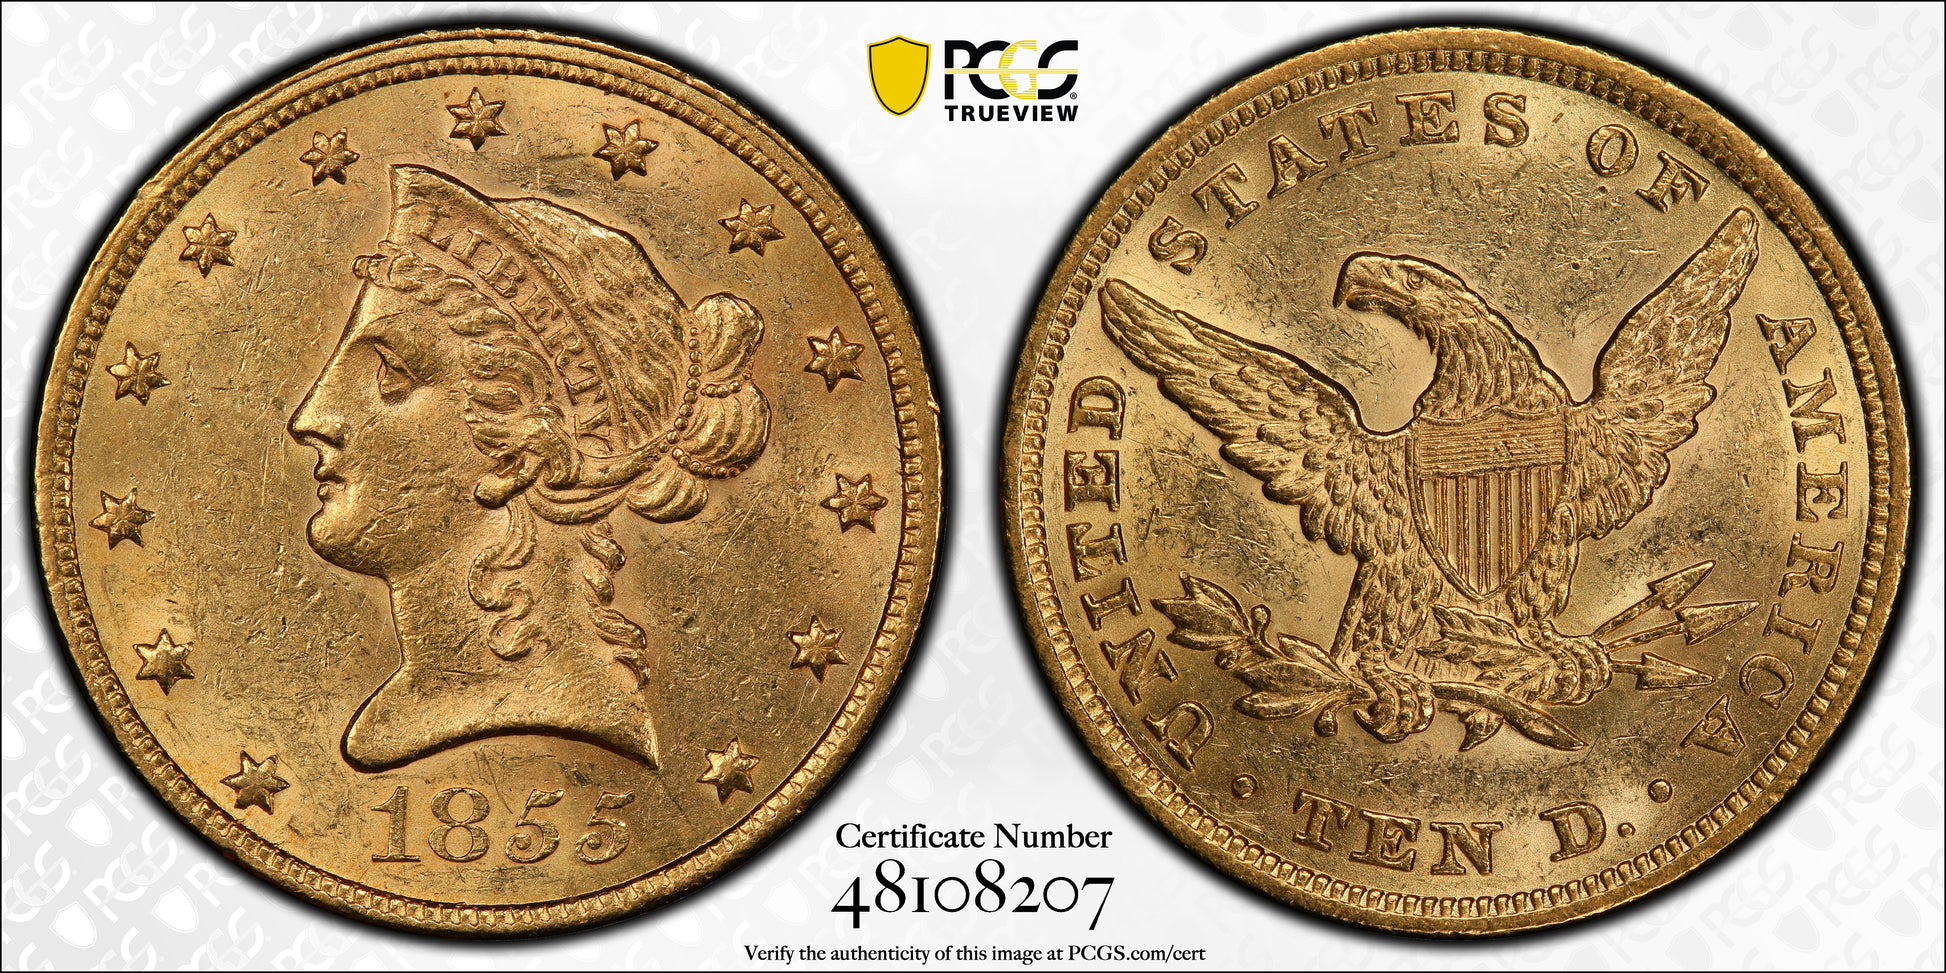 1855 Liberty Head Gold Eagle $10 PCGS MS61 Trueview